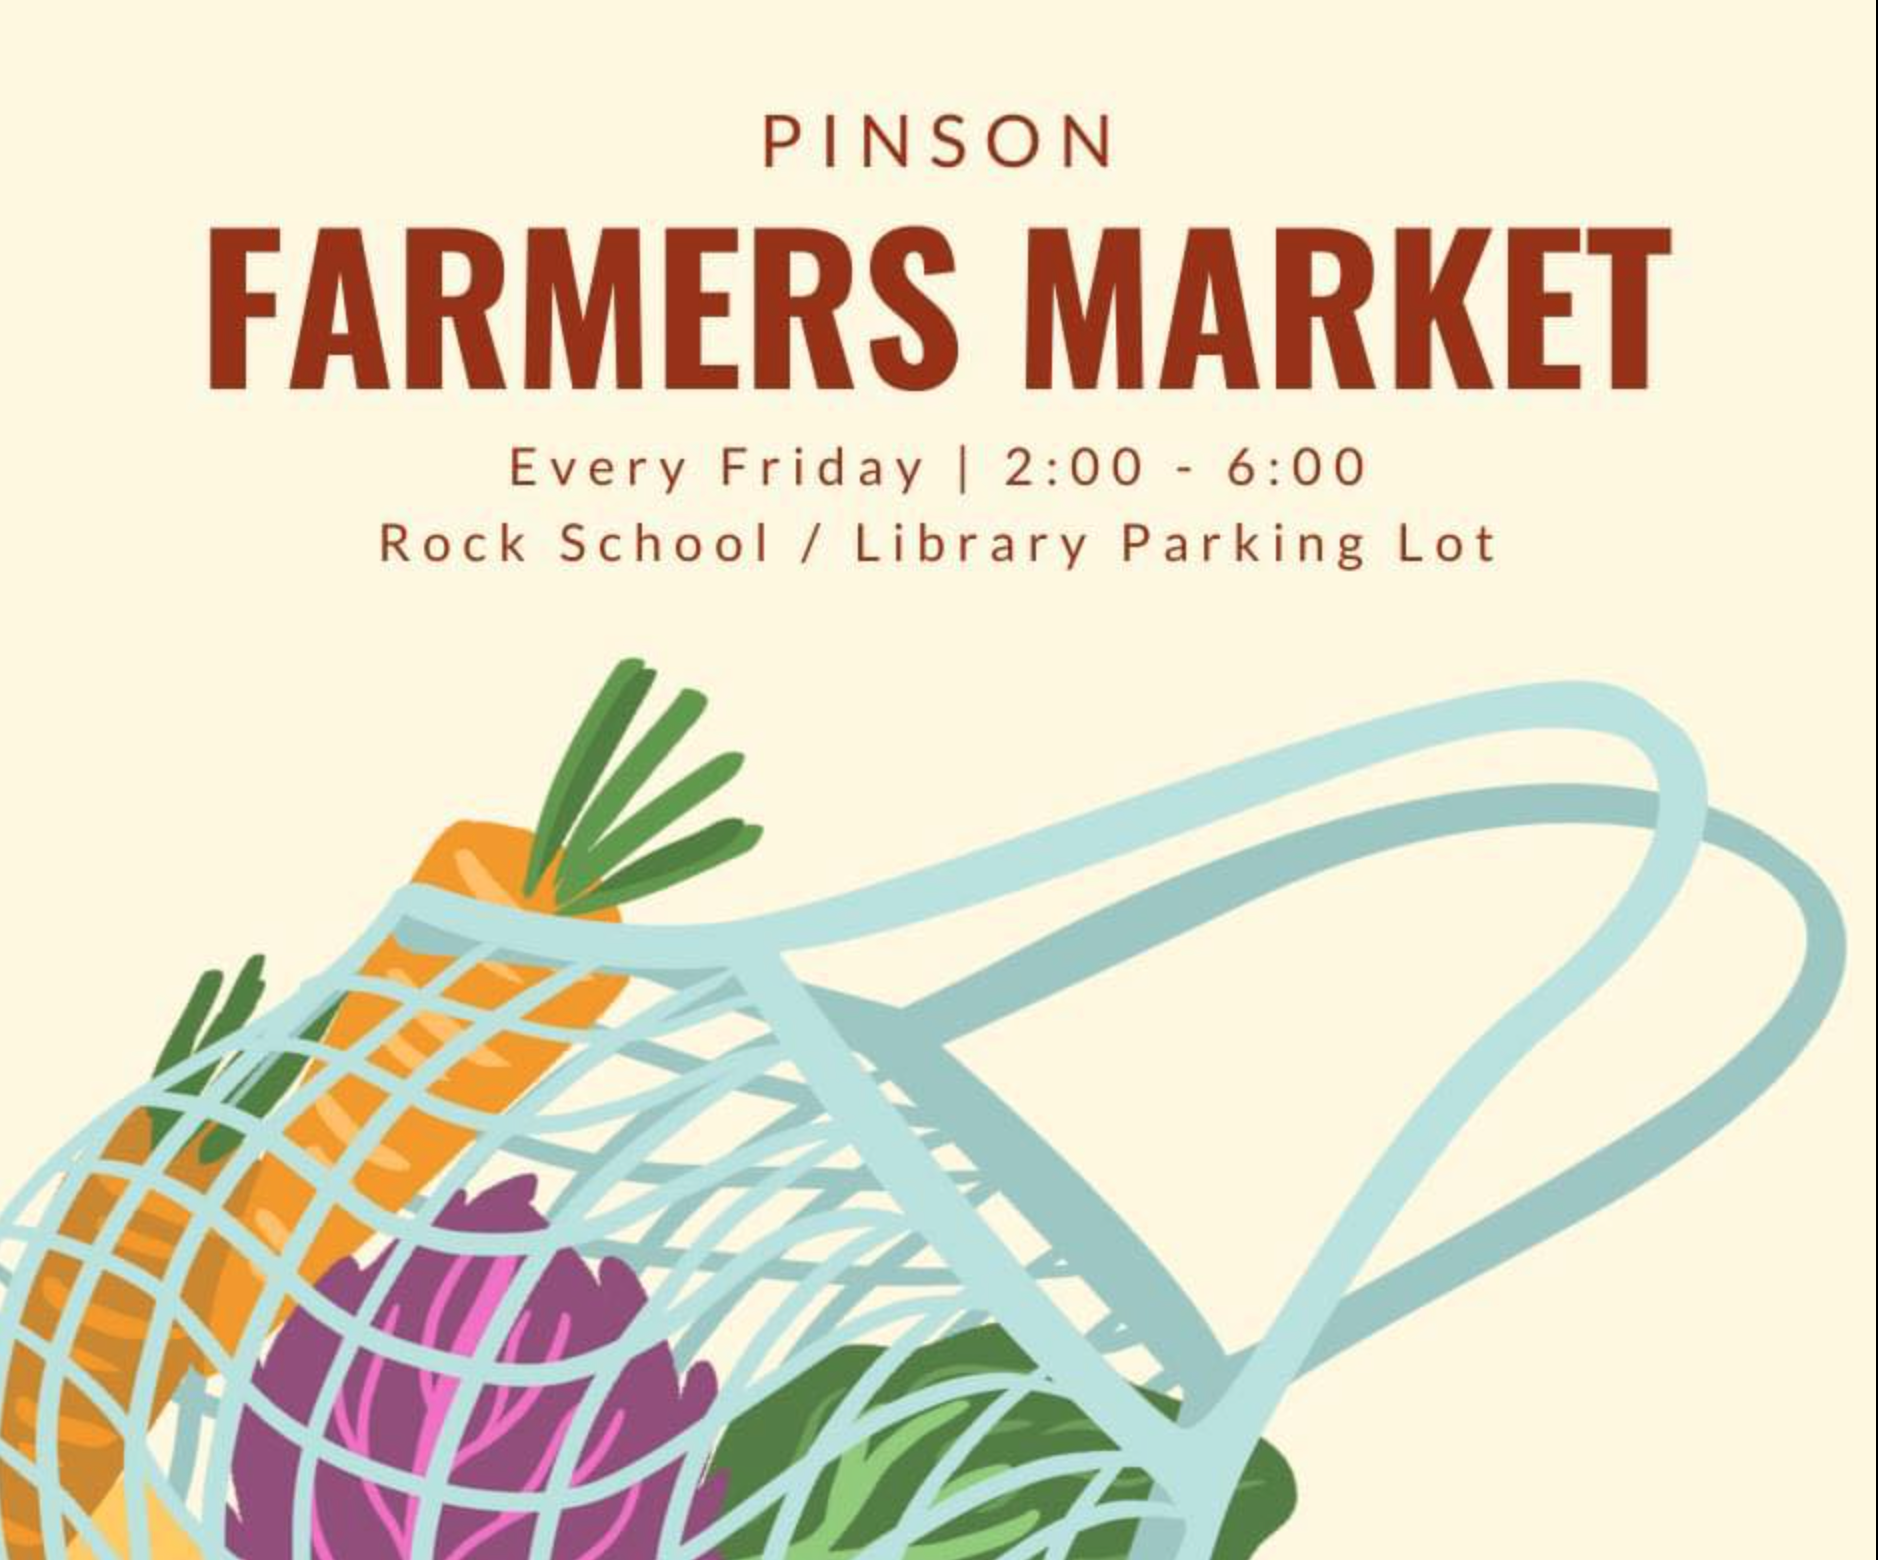 Pinson Farmers Market open every Friday